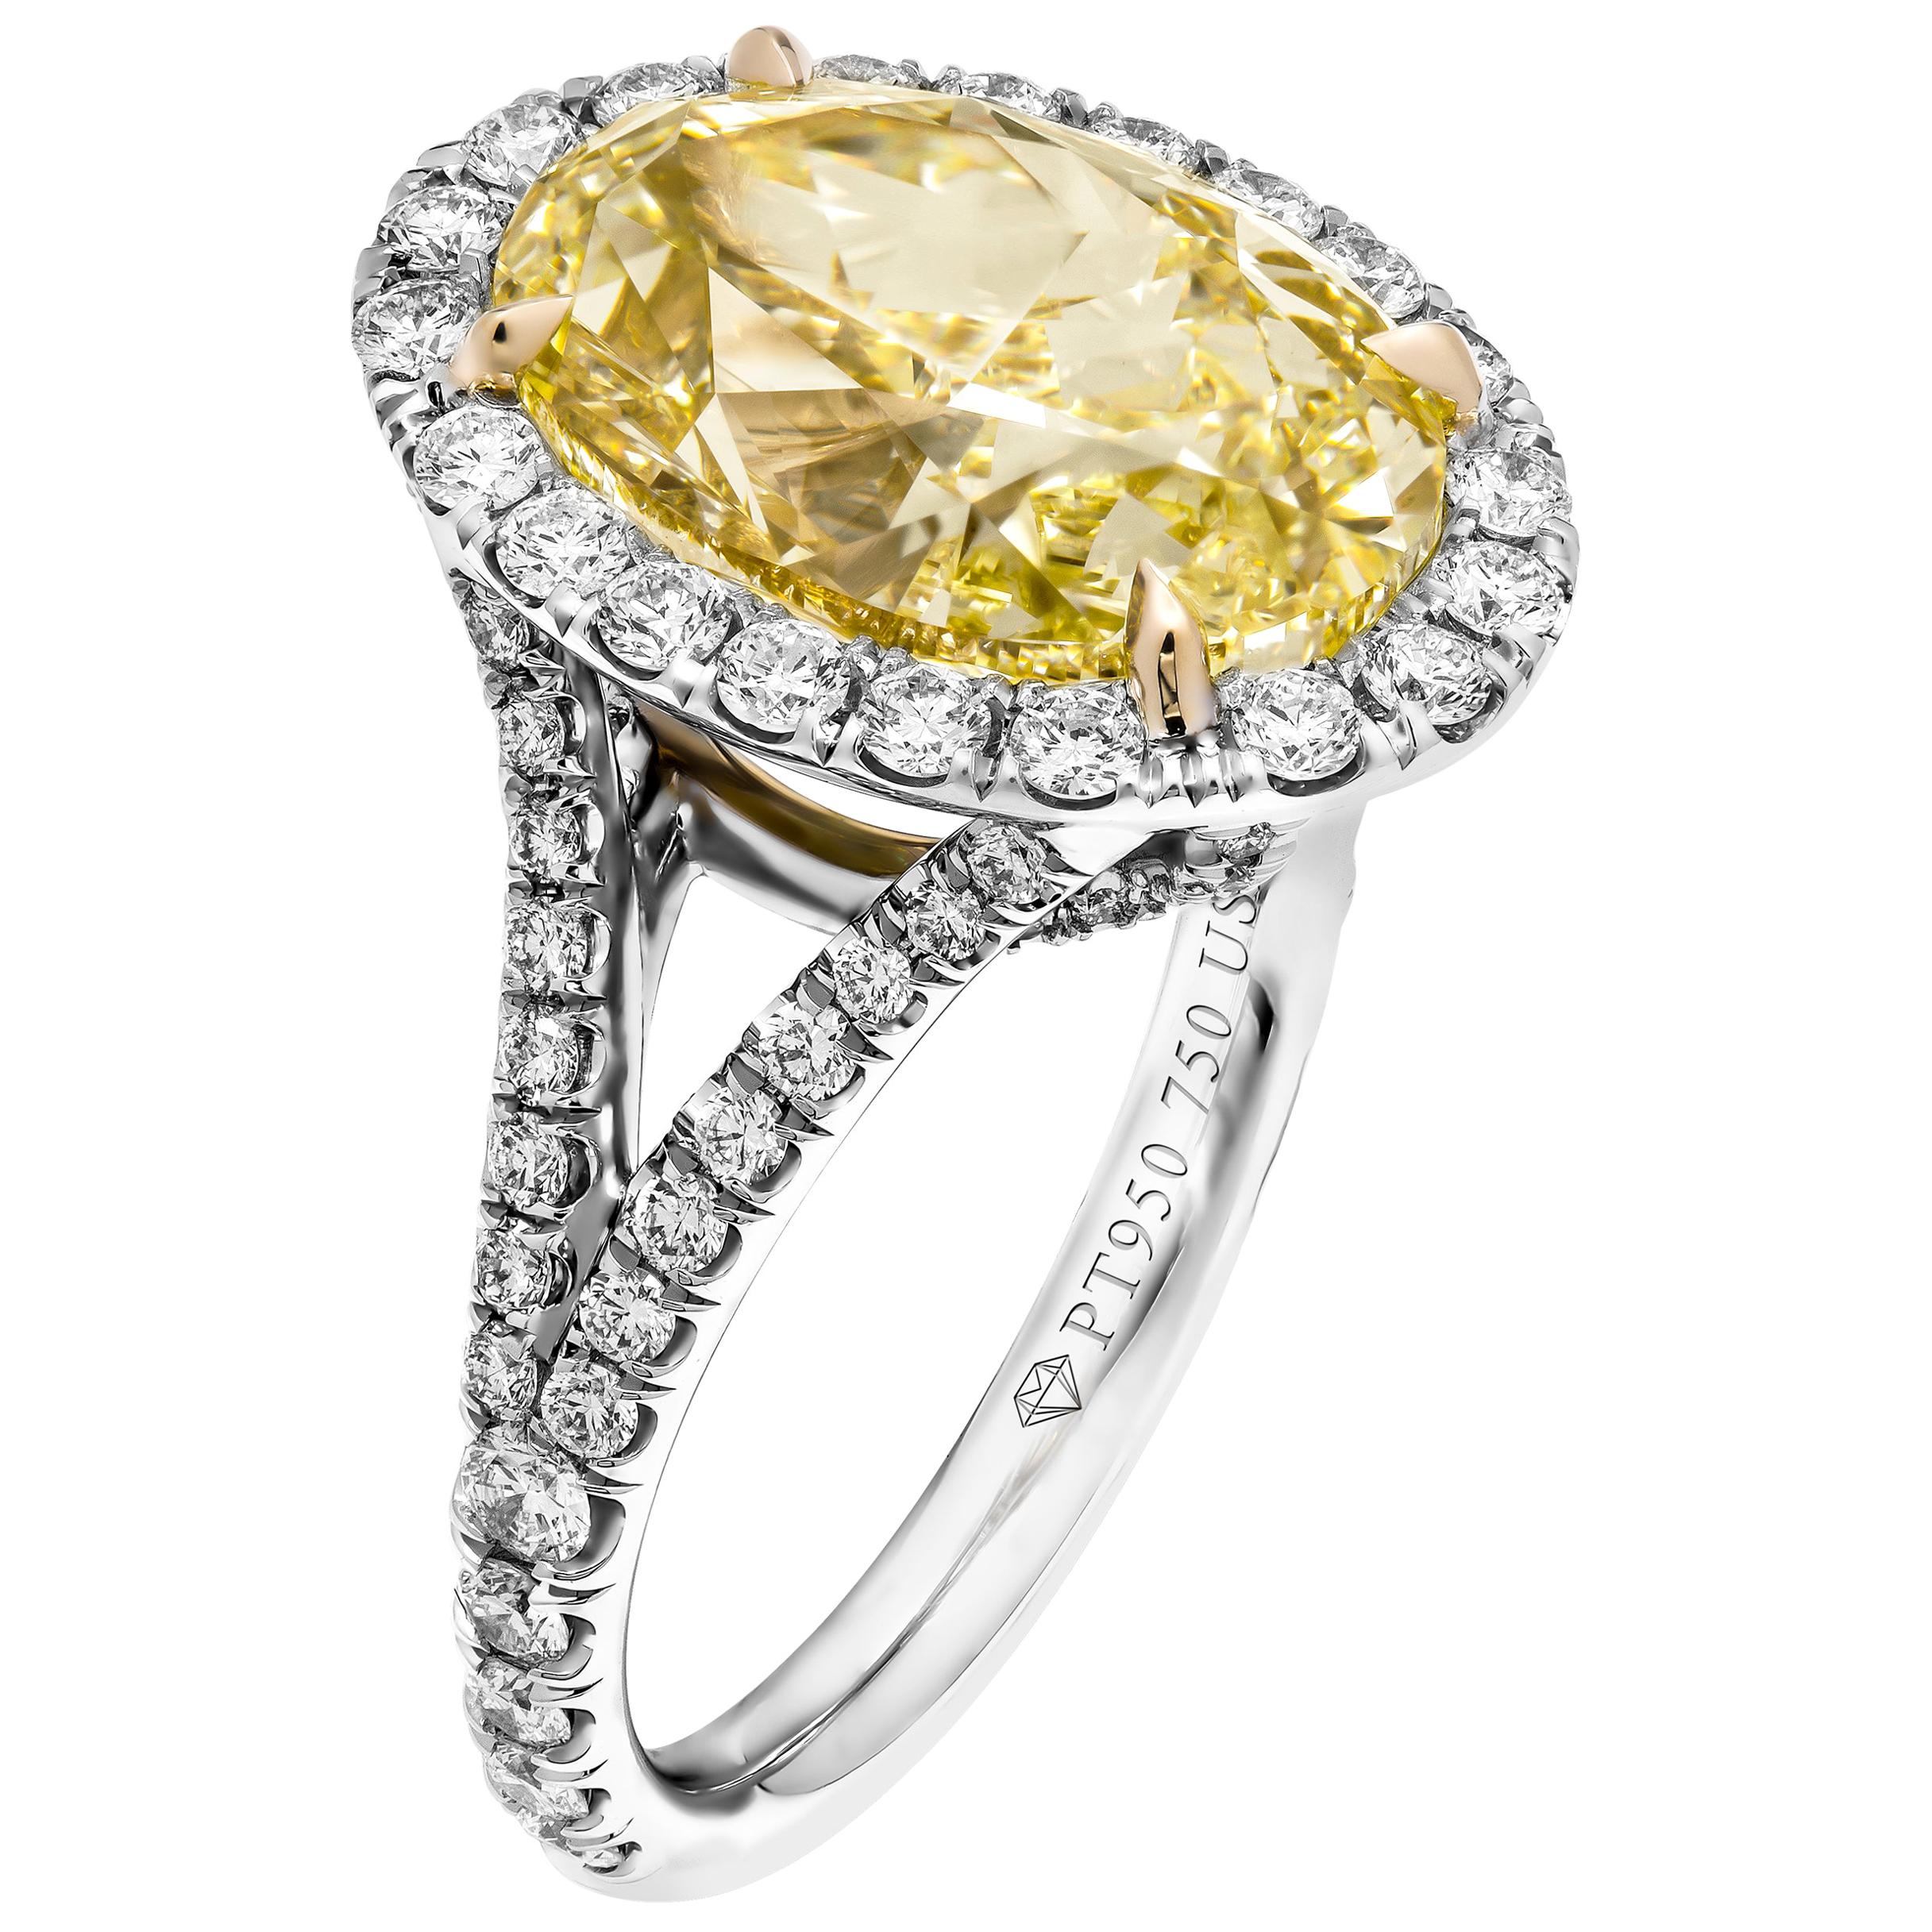 GIA Certified 6.54 Carat Oval Fancy Yellow Diamond Ring